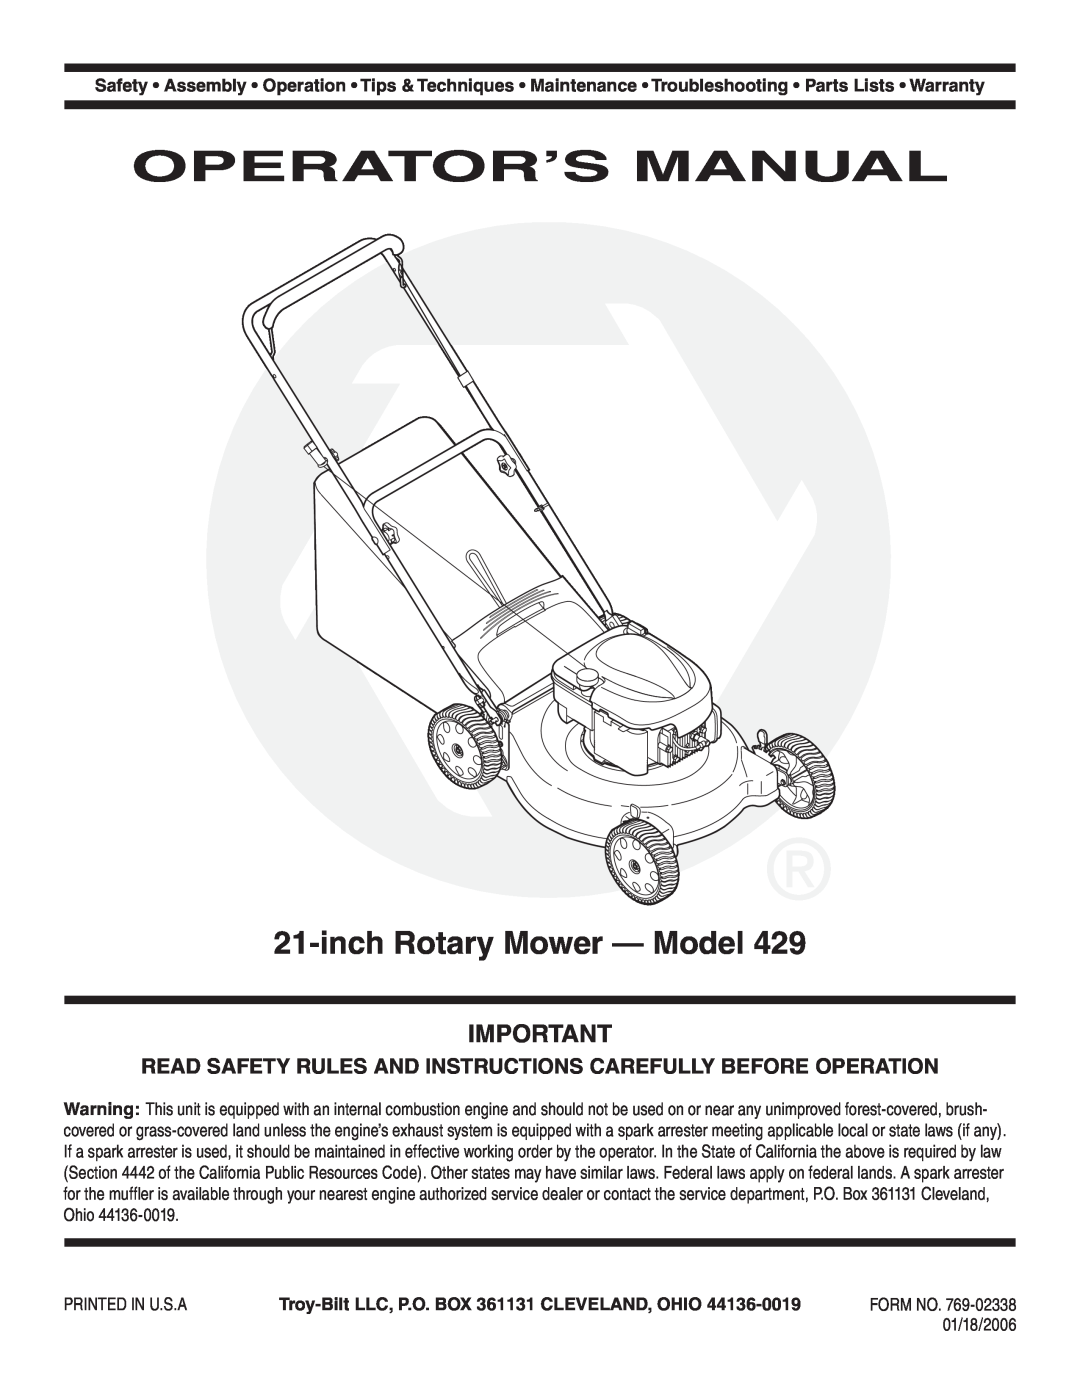 Troy-Bilt 429 warranty Operator’S Manual, inch Rotary Mower - Model, Printed In U.S.A, 01/18/2006 